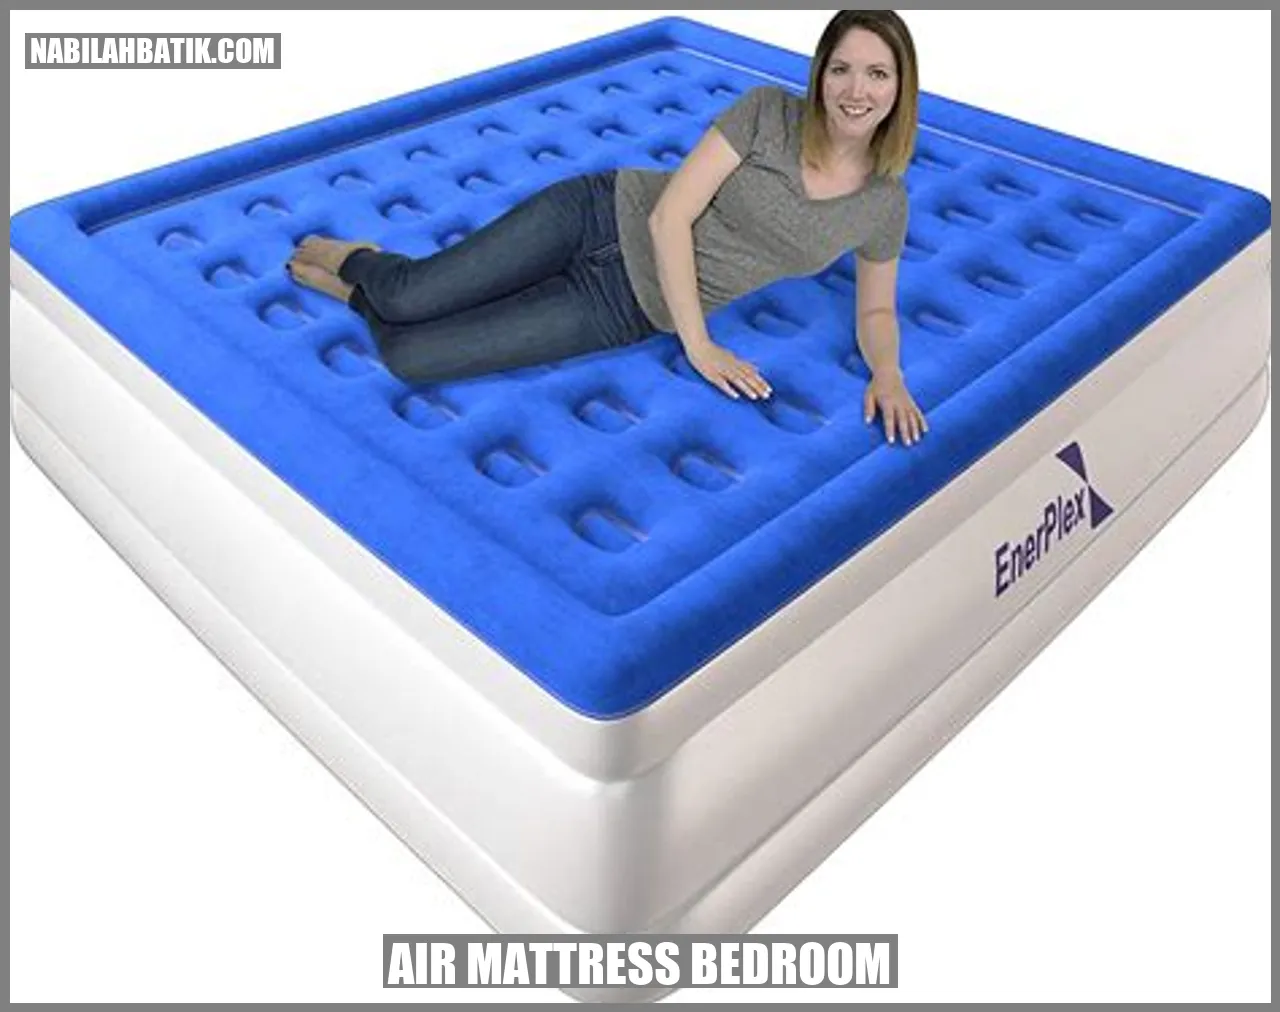 Air Mattress Bedroom